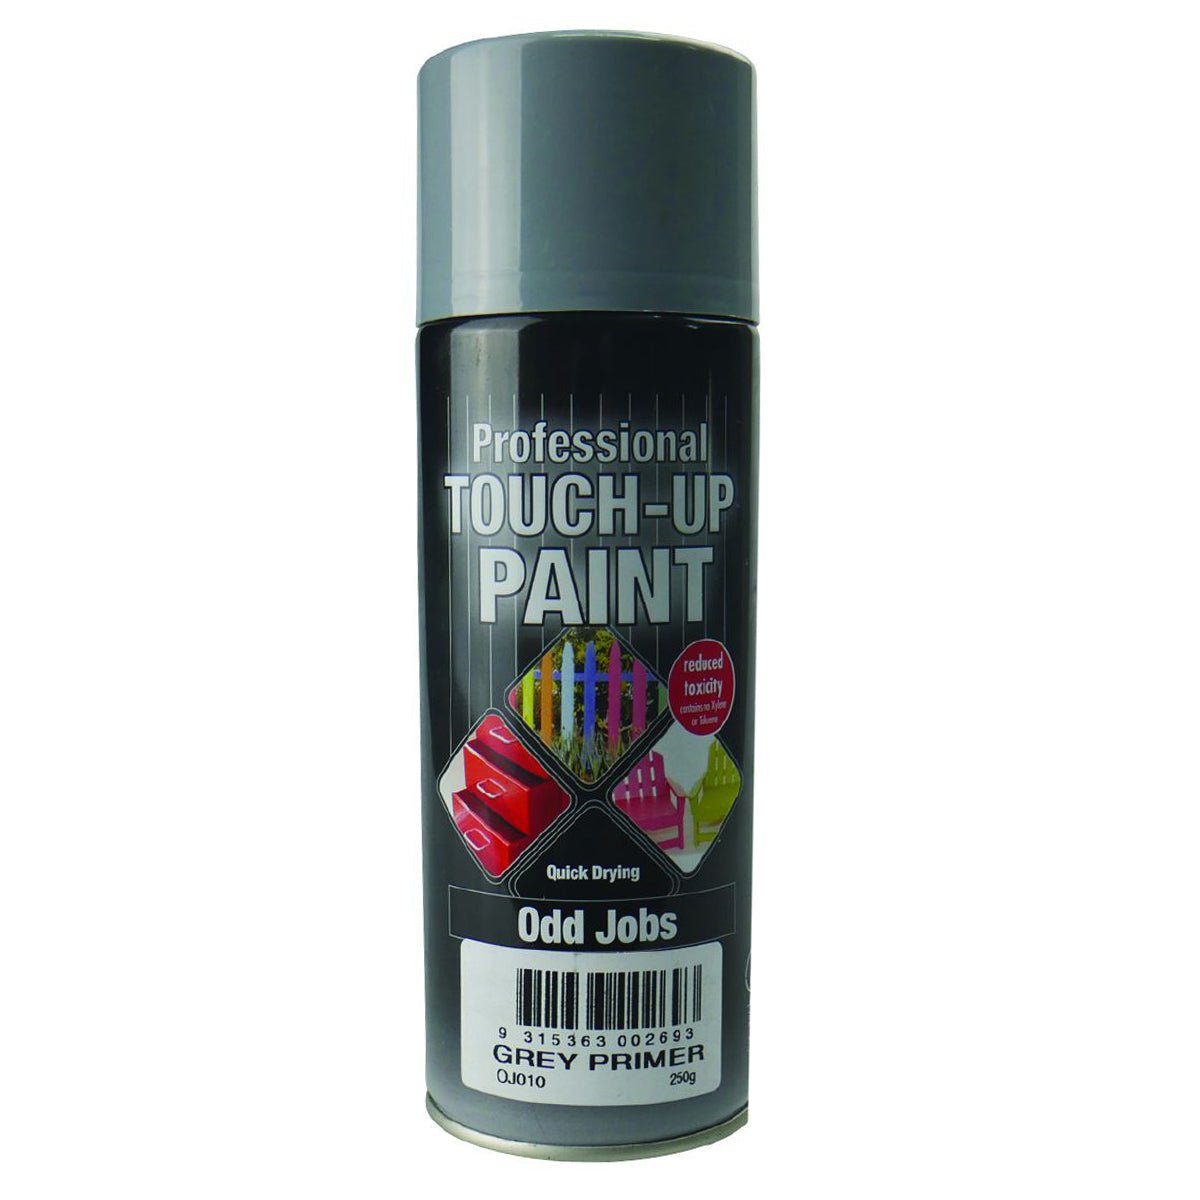 Odd Jobs Grey Primer Enamel Spray Paint 250gm OJ010 - Double Bay Hardware